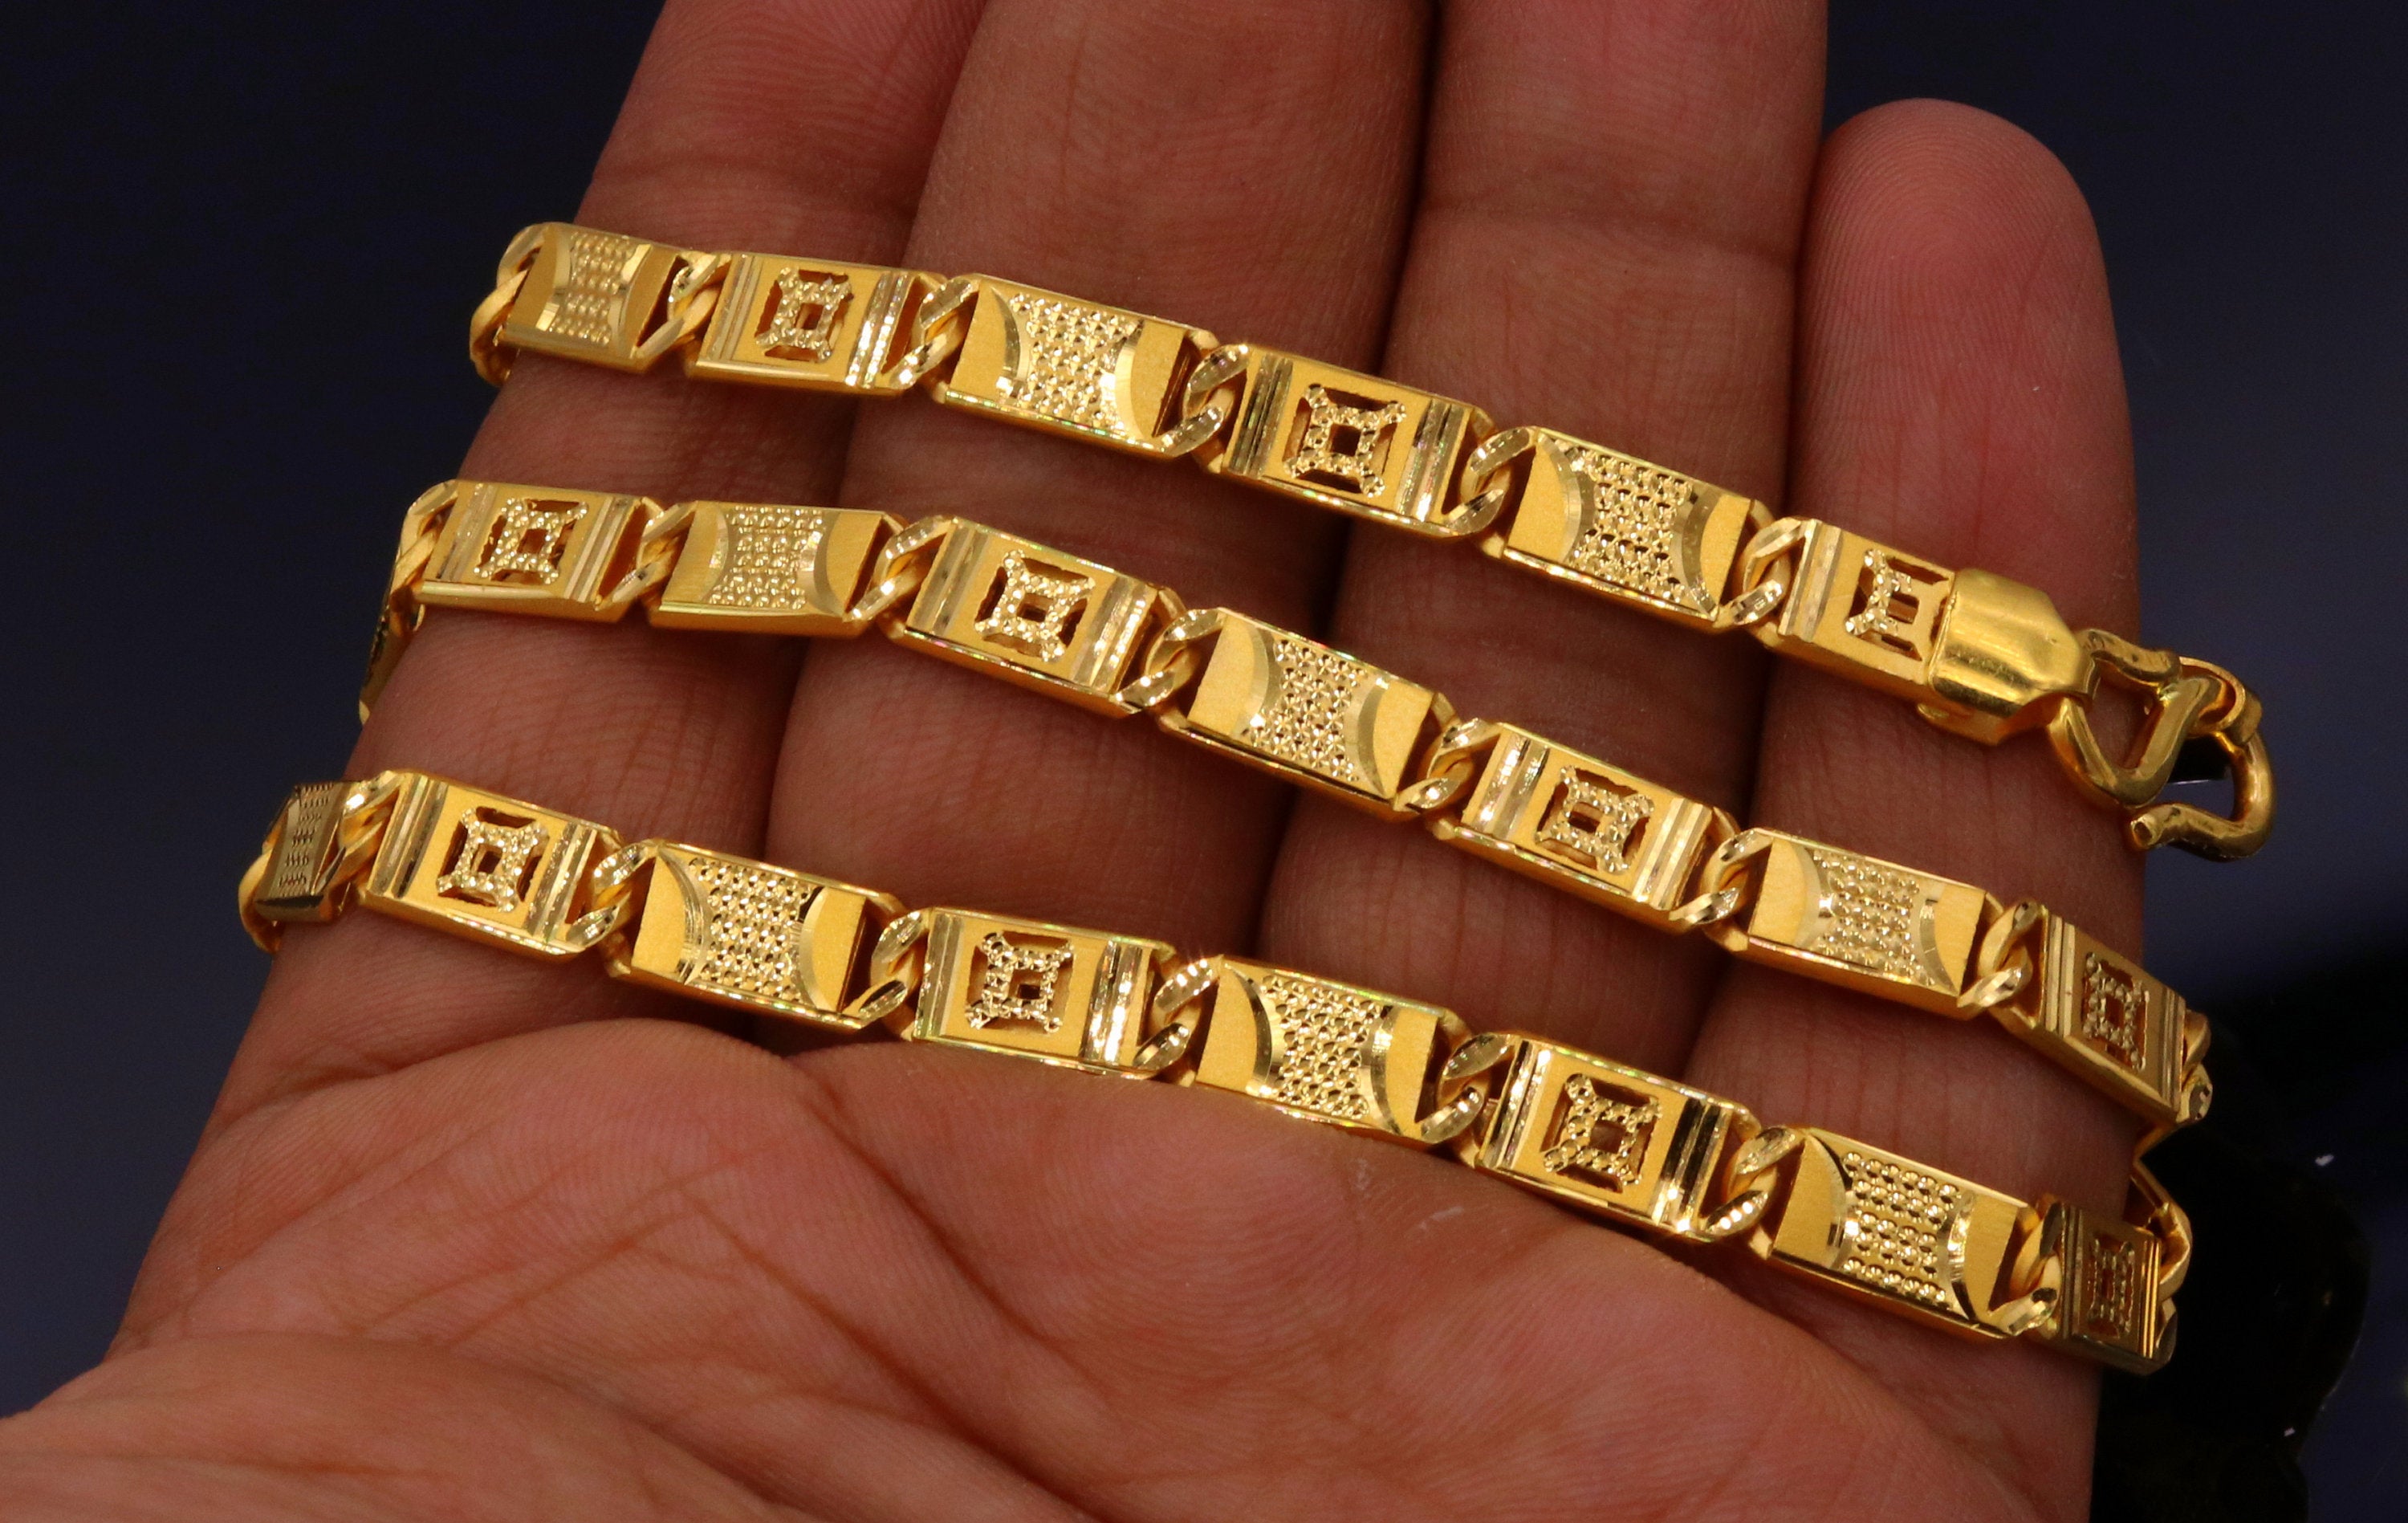 1 Gram Gold Forming Chokdi Nawabi Artisanal Design Bracelet For Men - Style  C253 at Rs 1980.00 | मेंस ब्रेसलेट - Soni Fashion, Rajkot | ID:  2851348930455